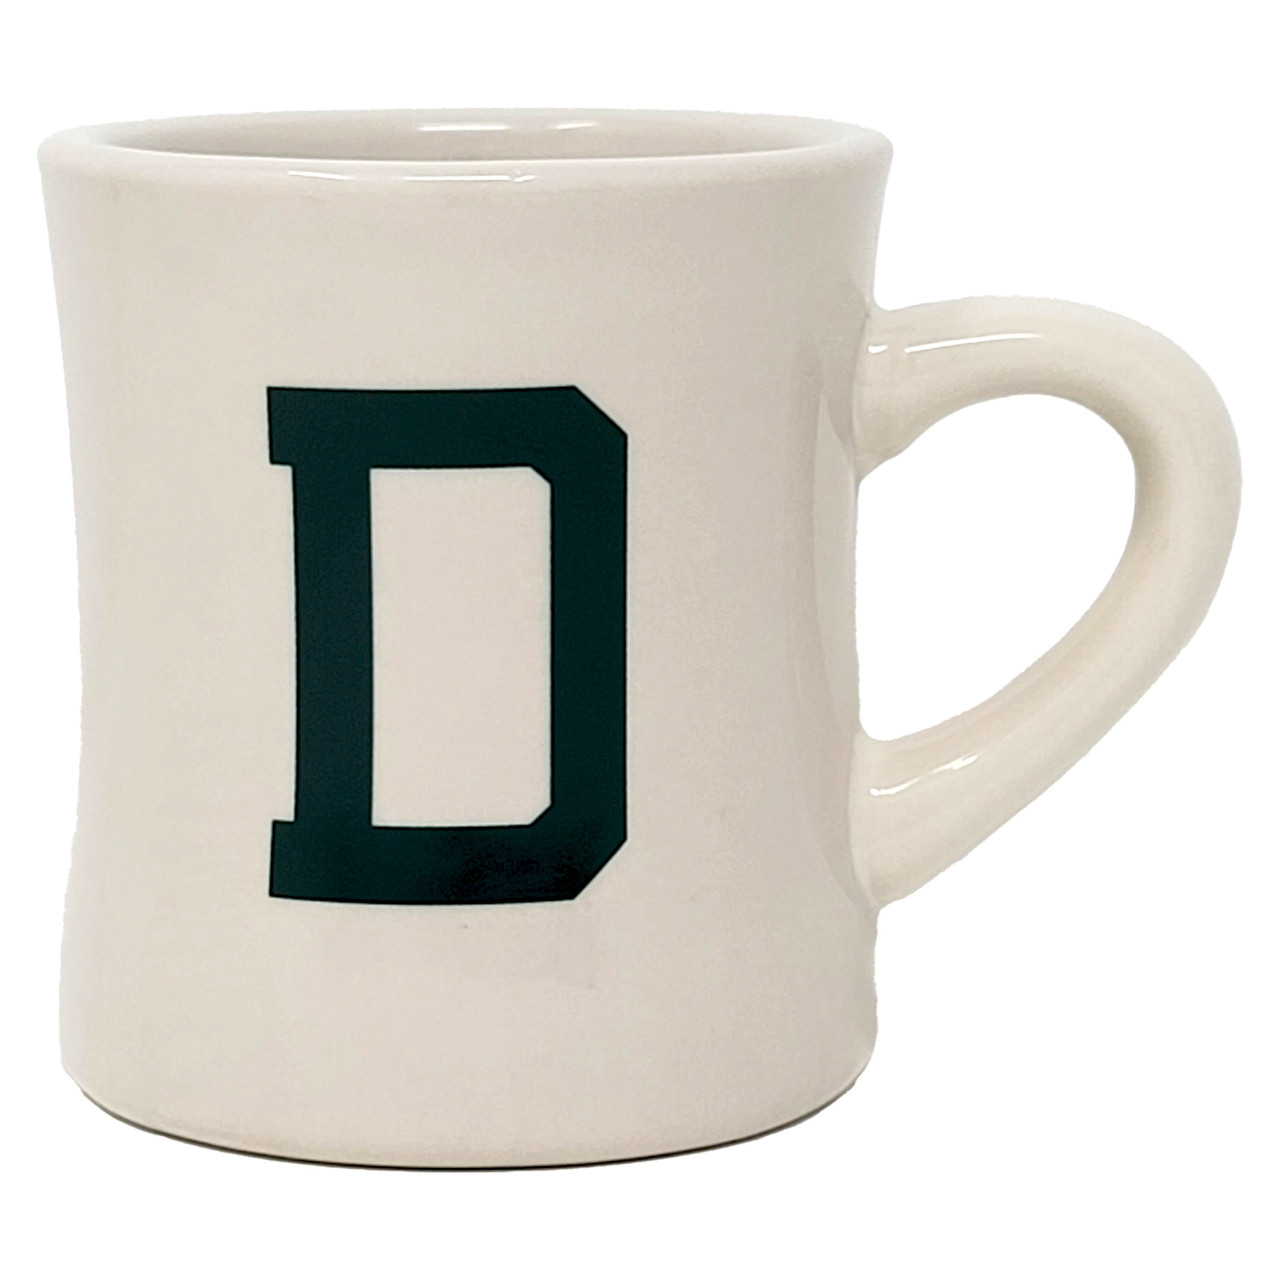 Dartmouth Diner Mug, Dartmouth College Mugs, Dartmouth Mugs